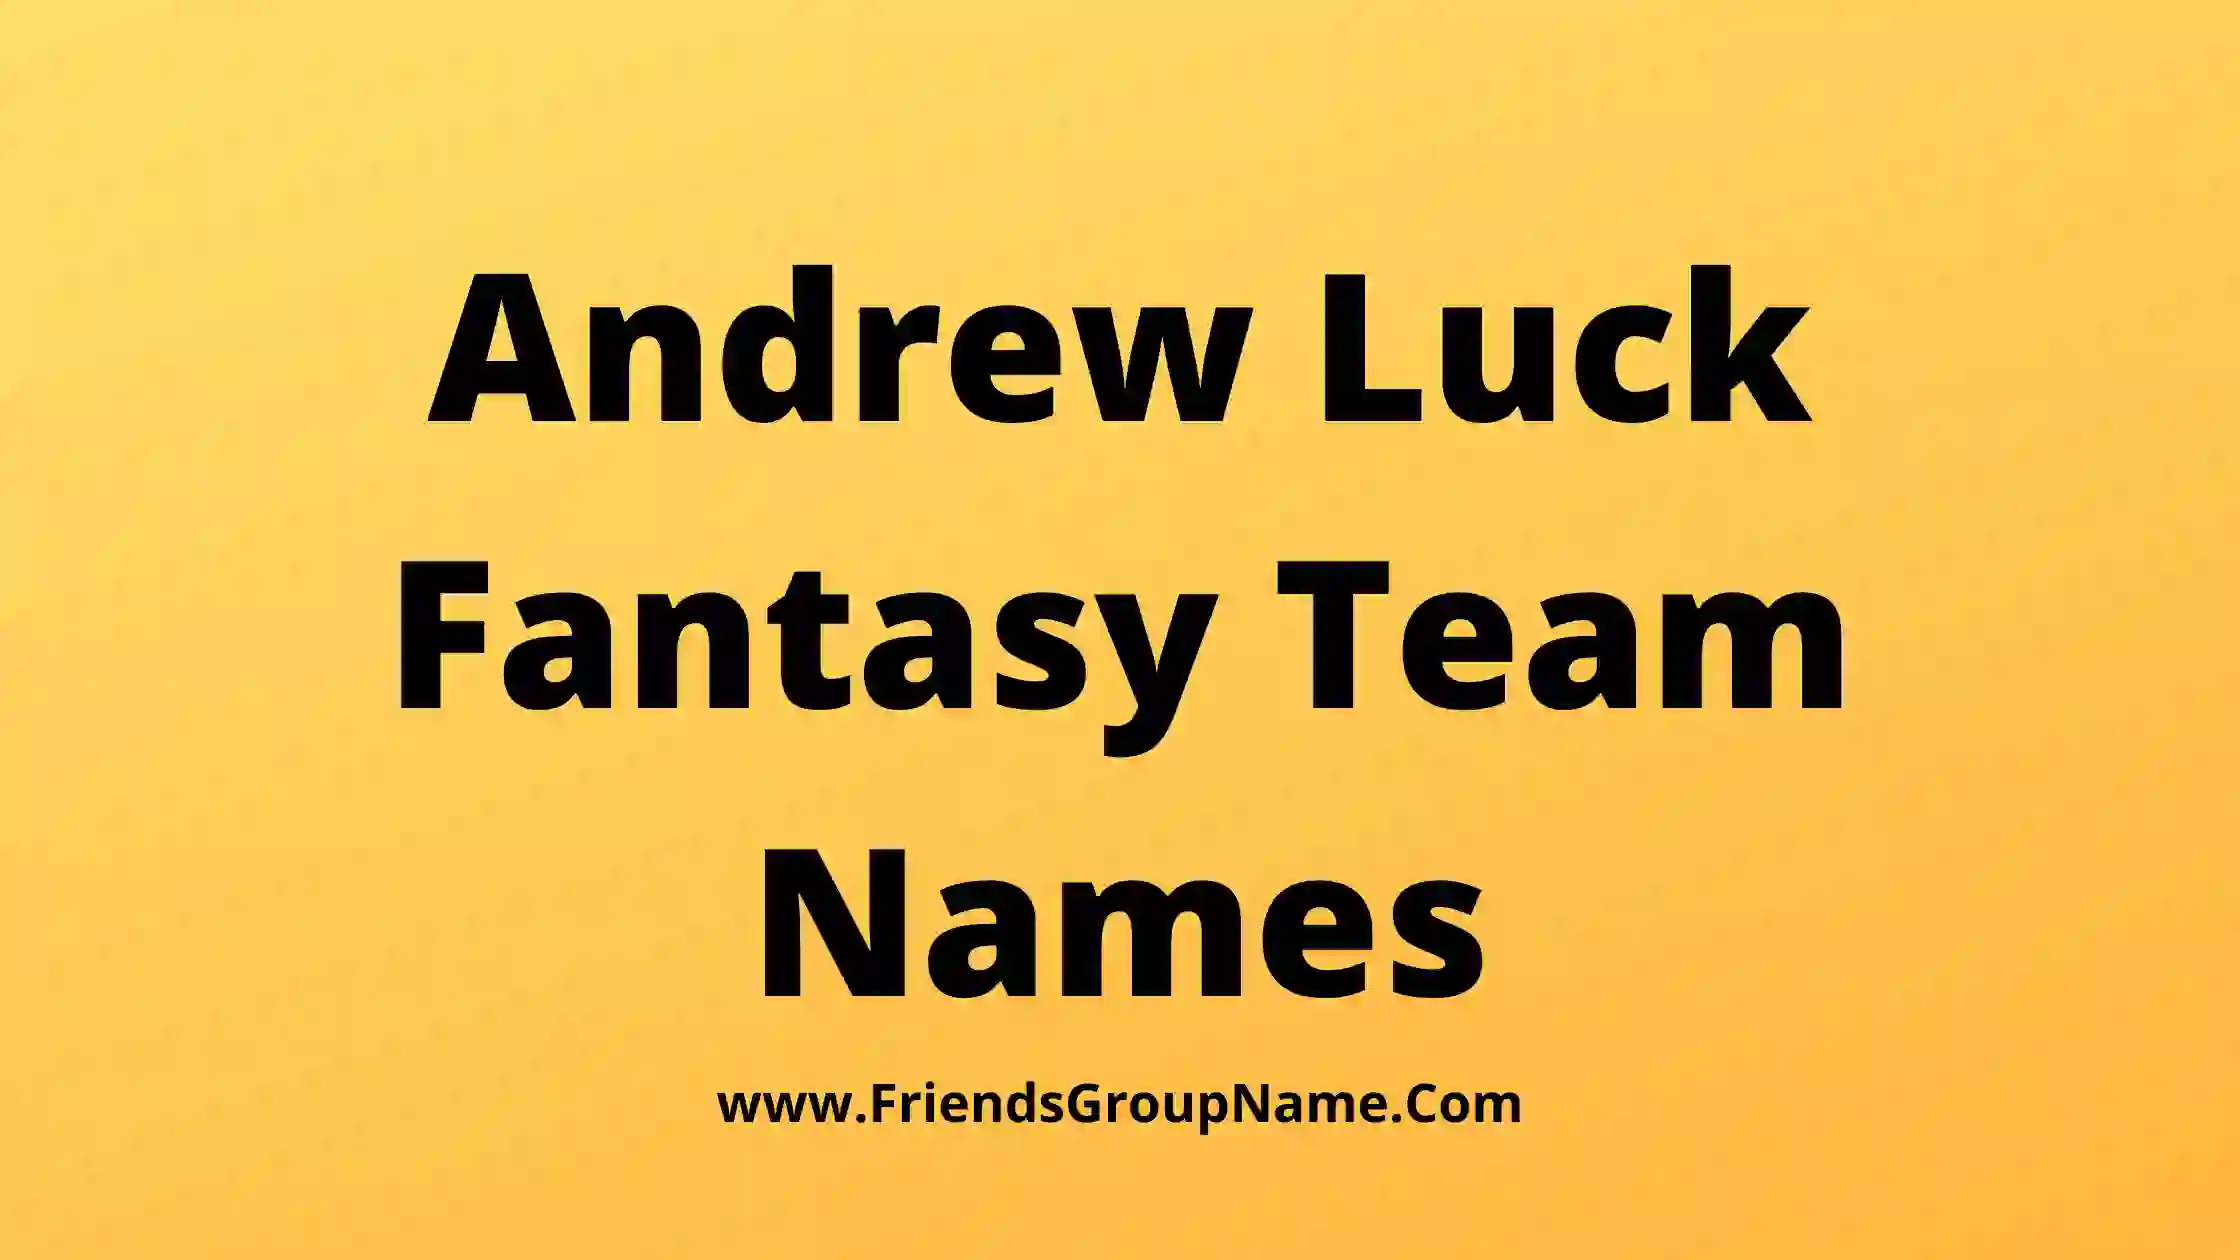 Andrew Luck Fantasy Team Names